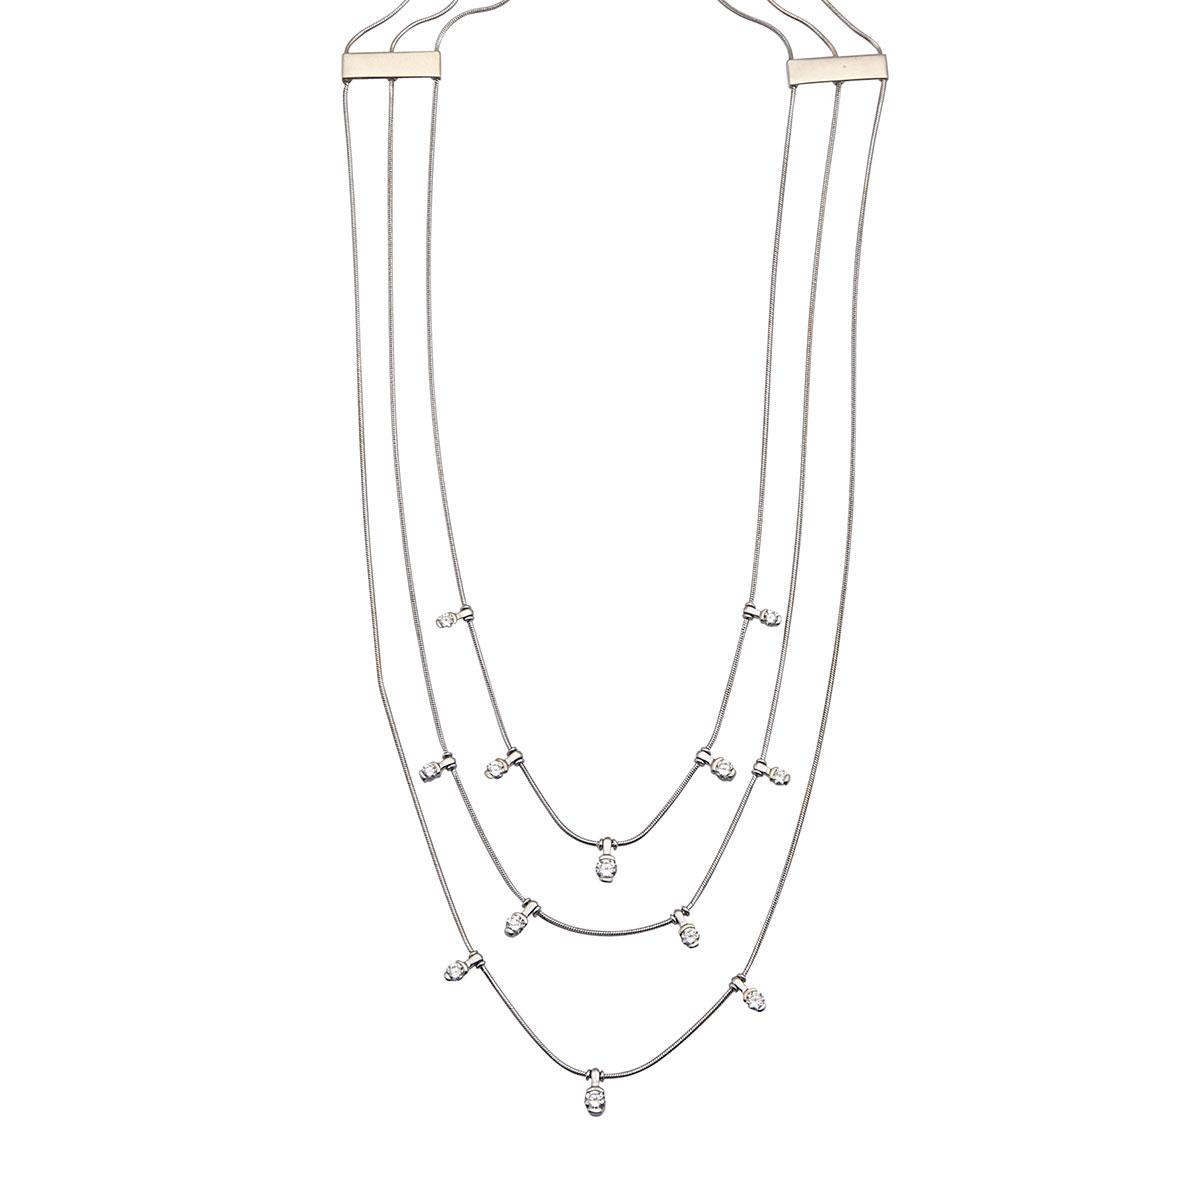 Jose Hess 18k White Gold Triple Strand Necklace